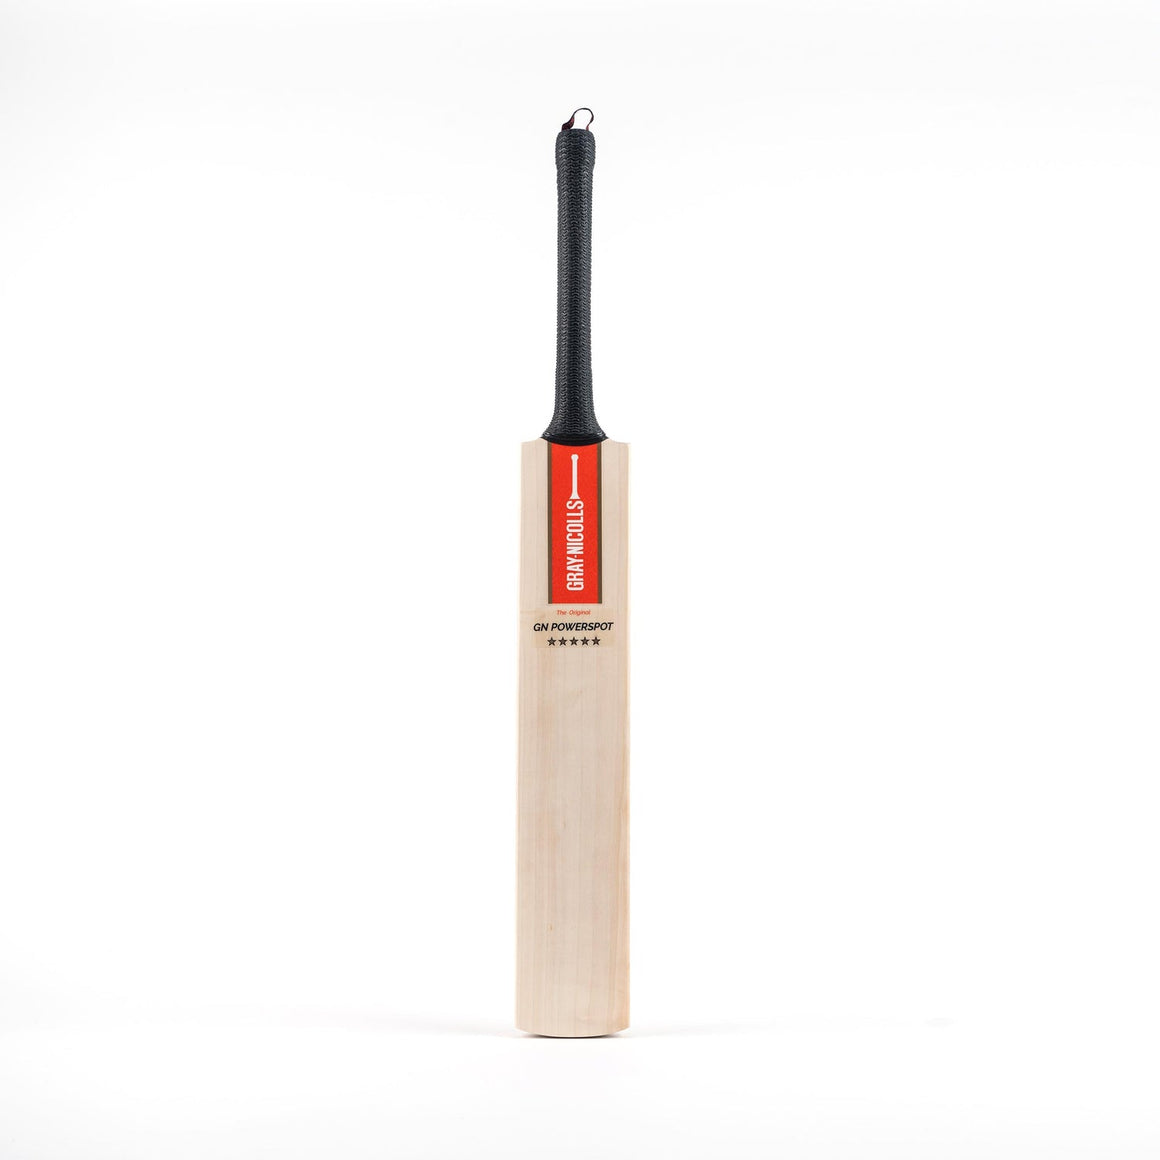 Gray Nicolls Powerspot 300 Cricket Bat (SH)